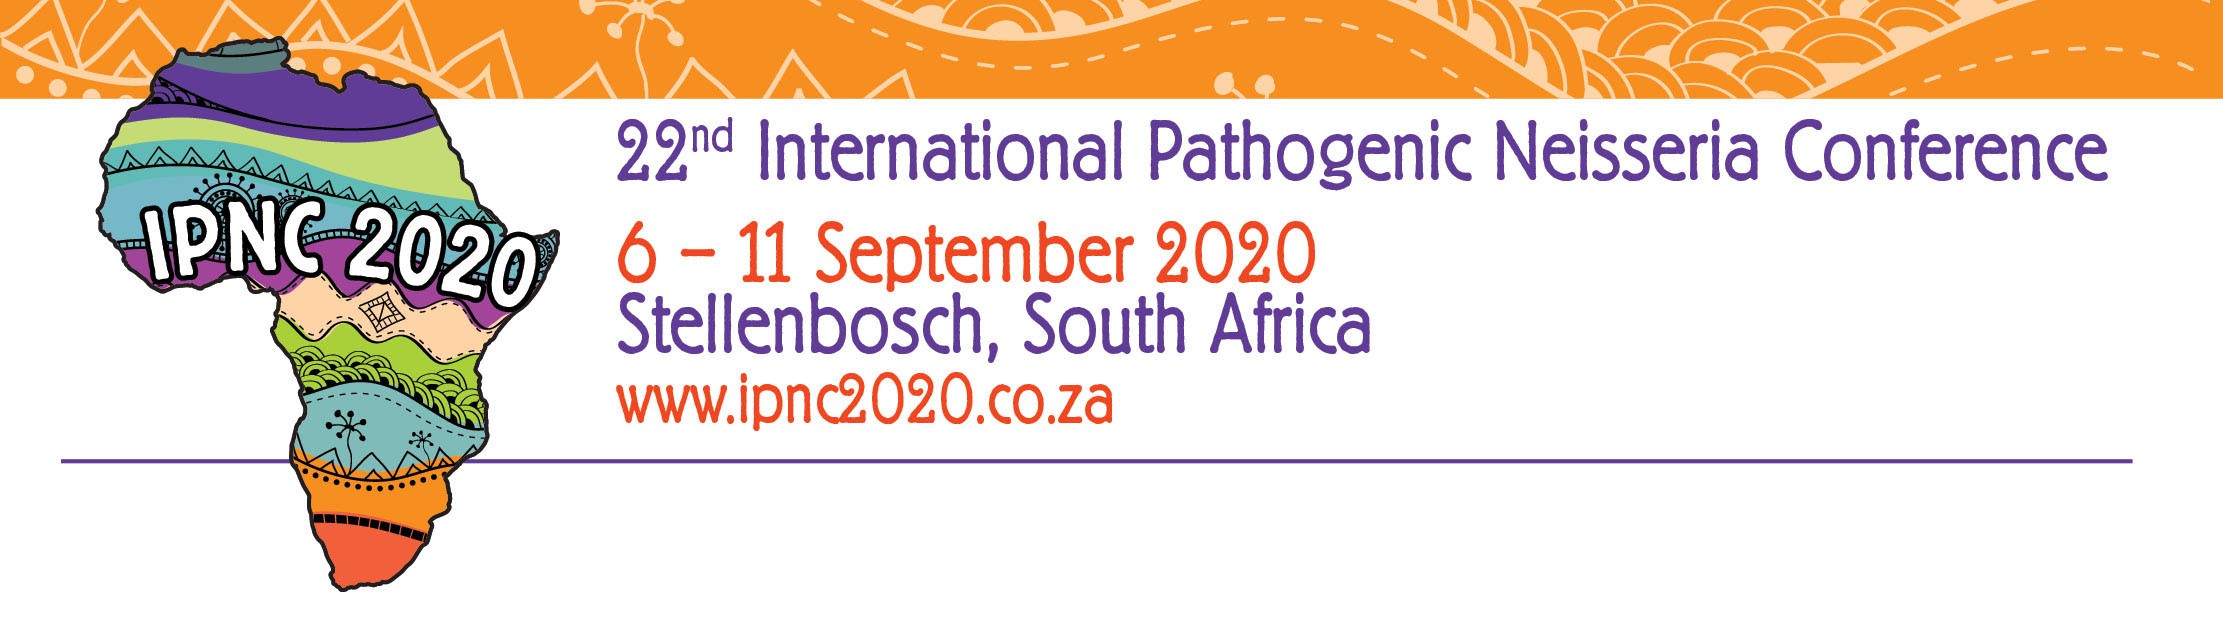 The 22nd International Pathogenic Neisseria Conference IPNC 2020